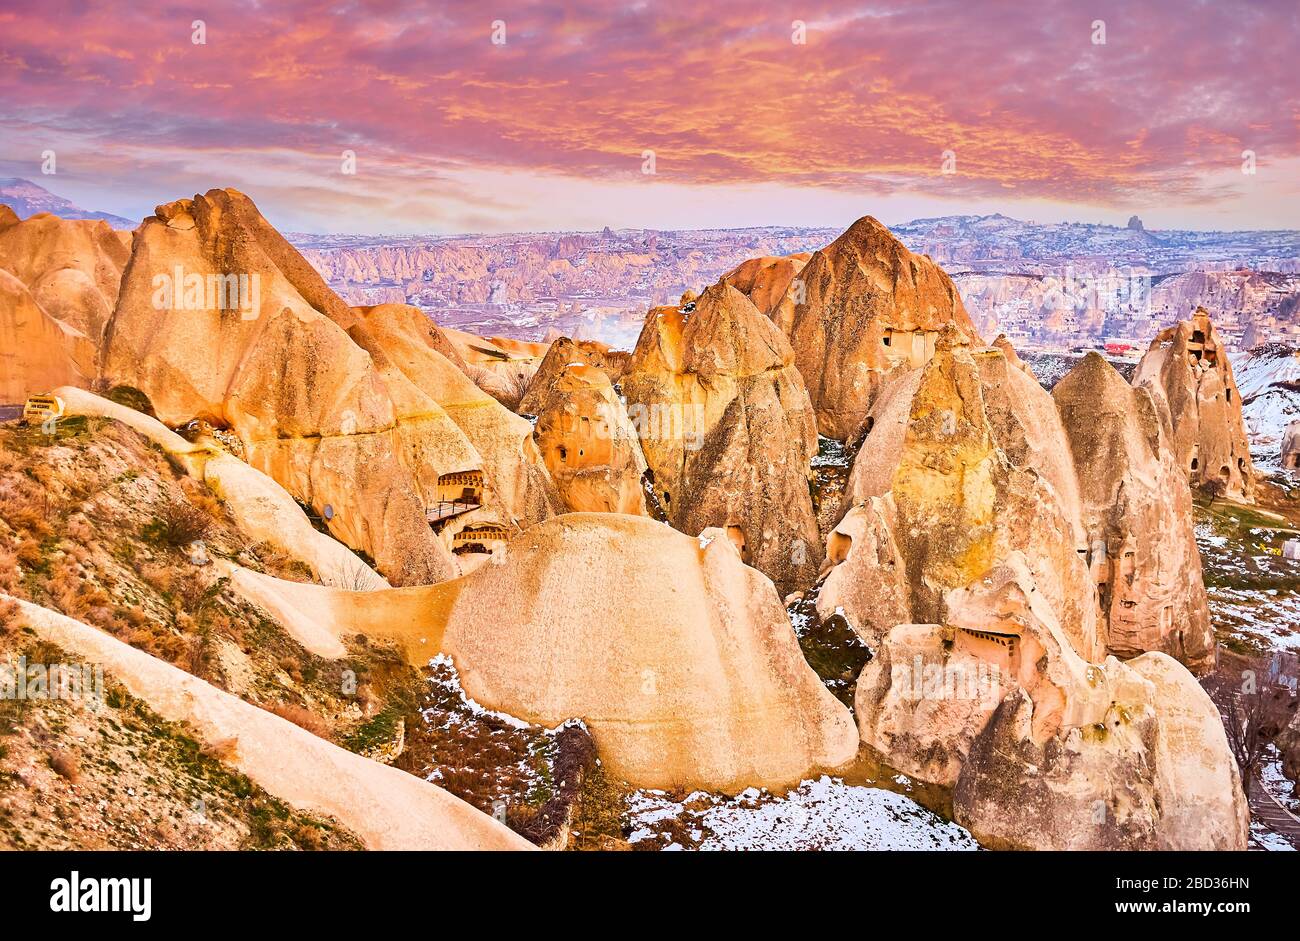 The bright orange rocks and cliffs of Cappadocia looks great in purple twilights, Turkey Stock Photo